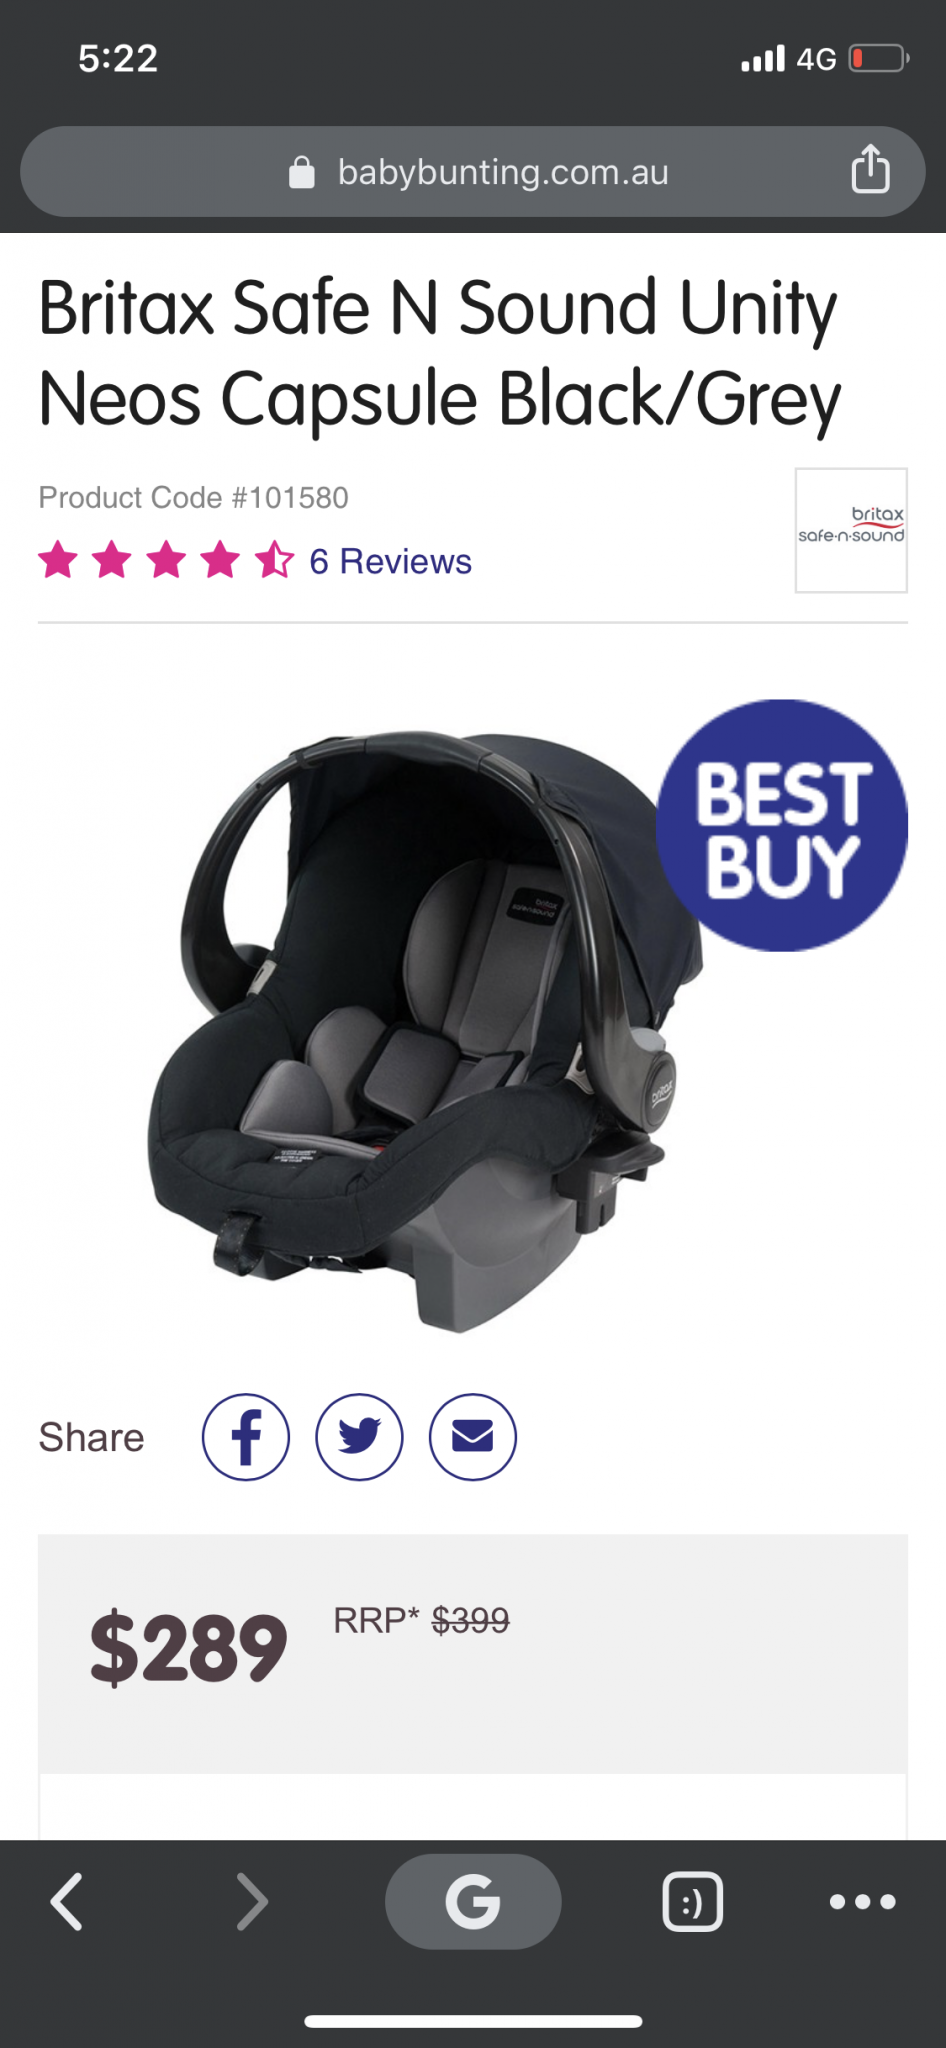 Newborn car seat